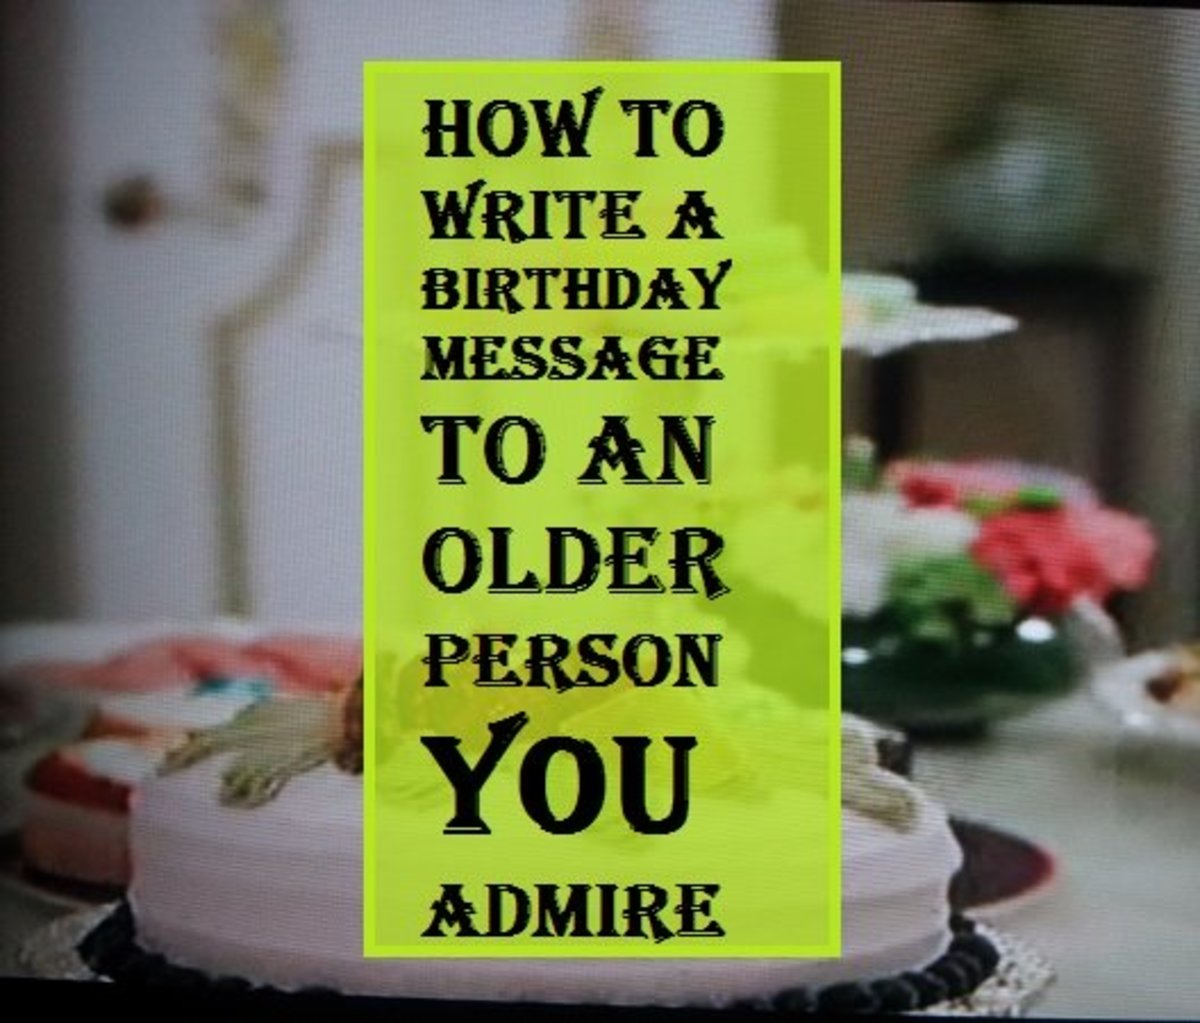 Write a birthday message